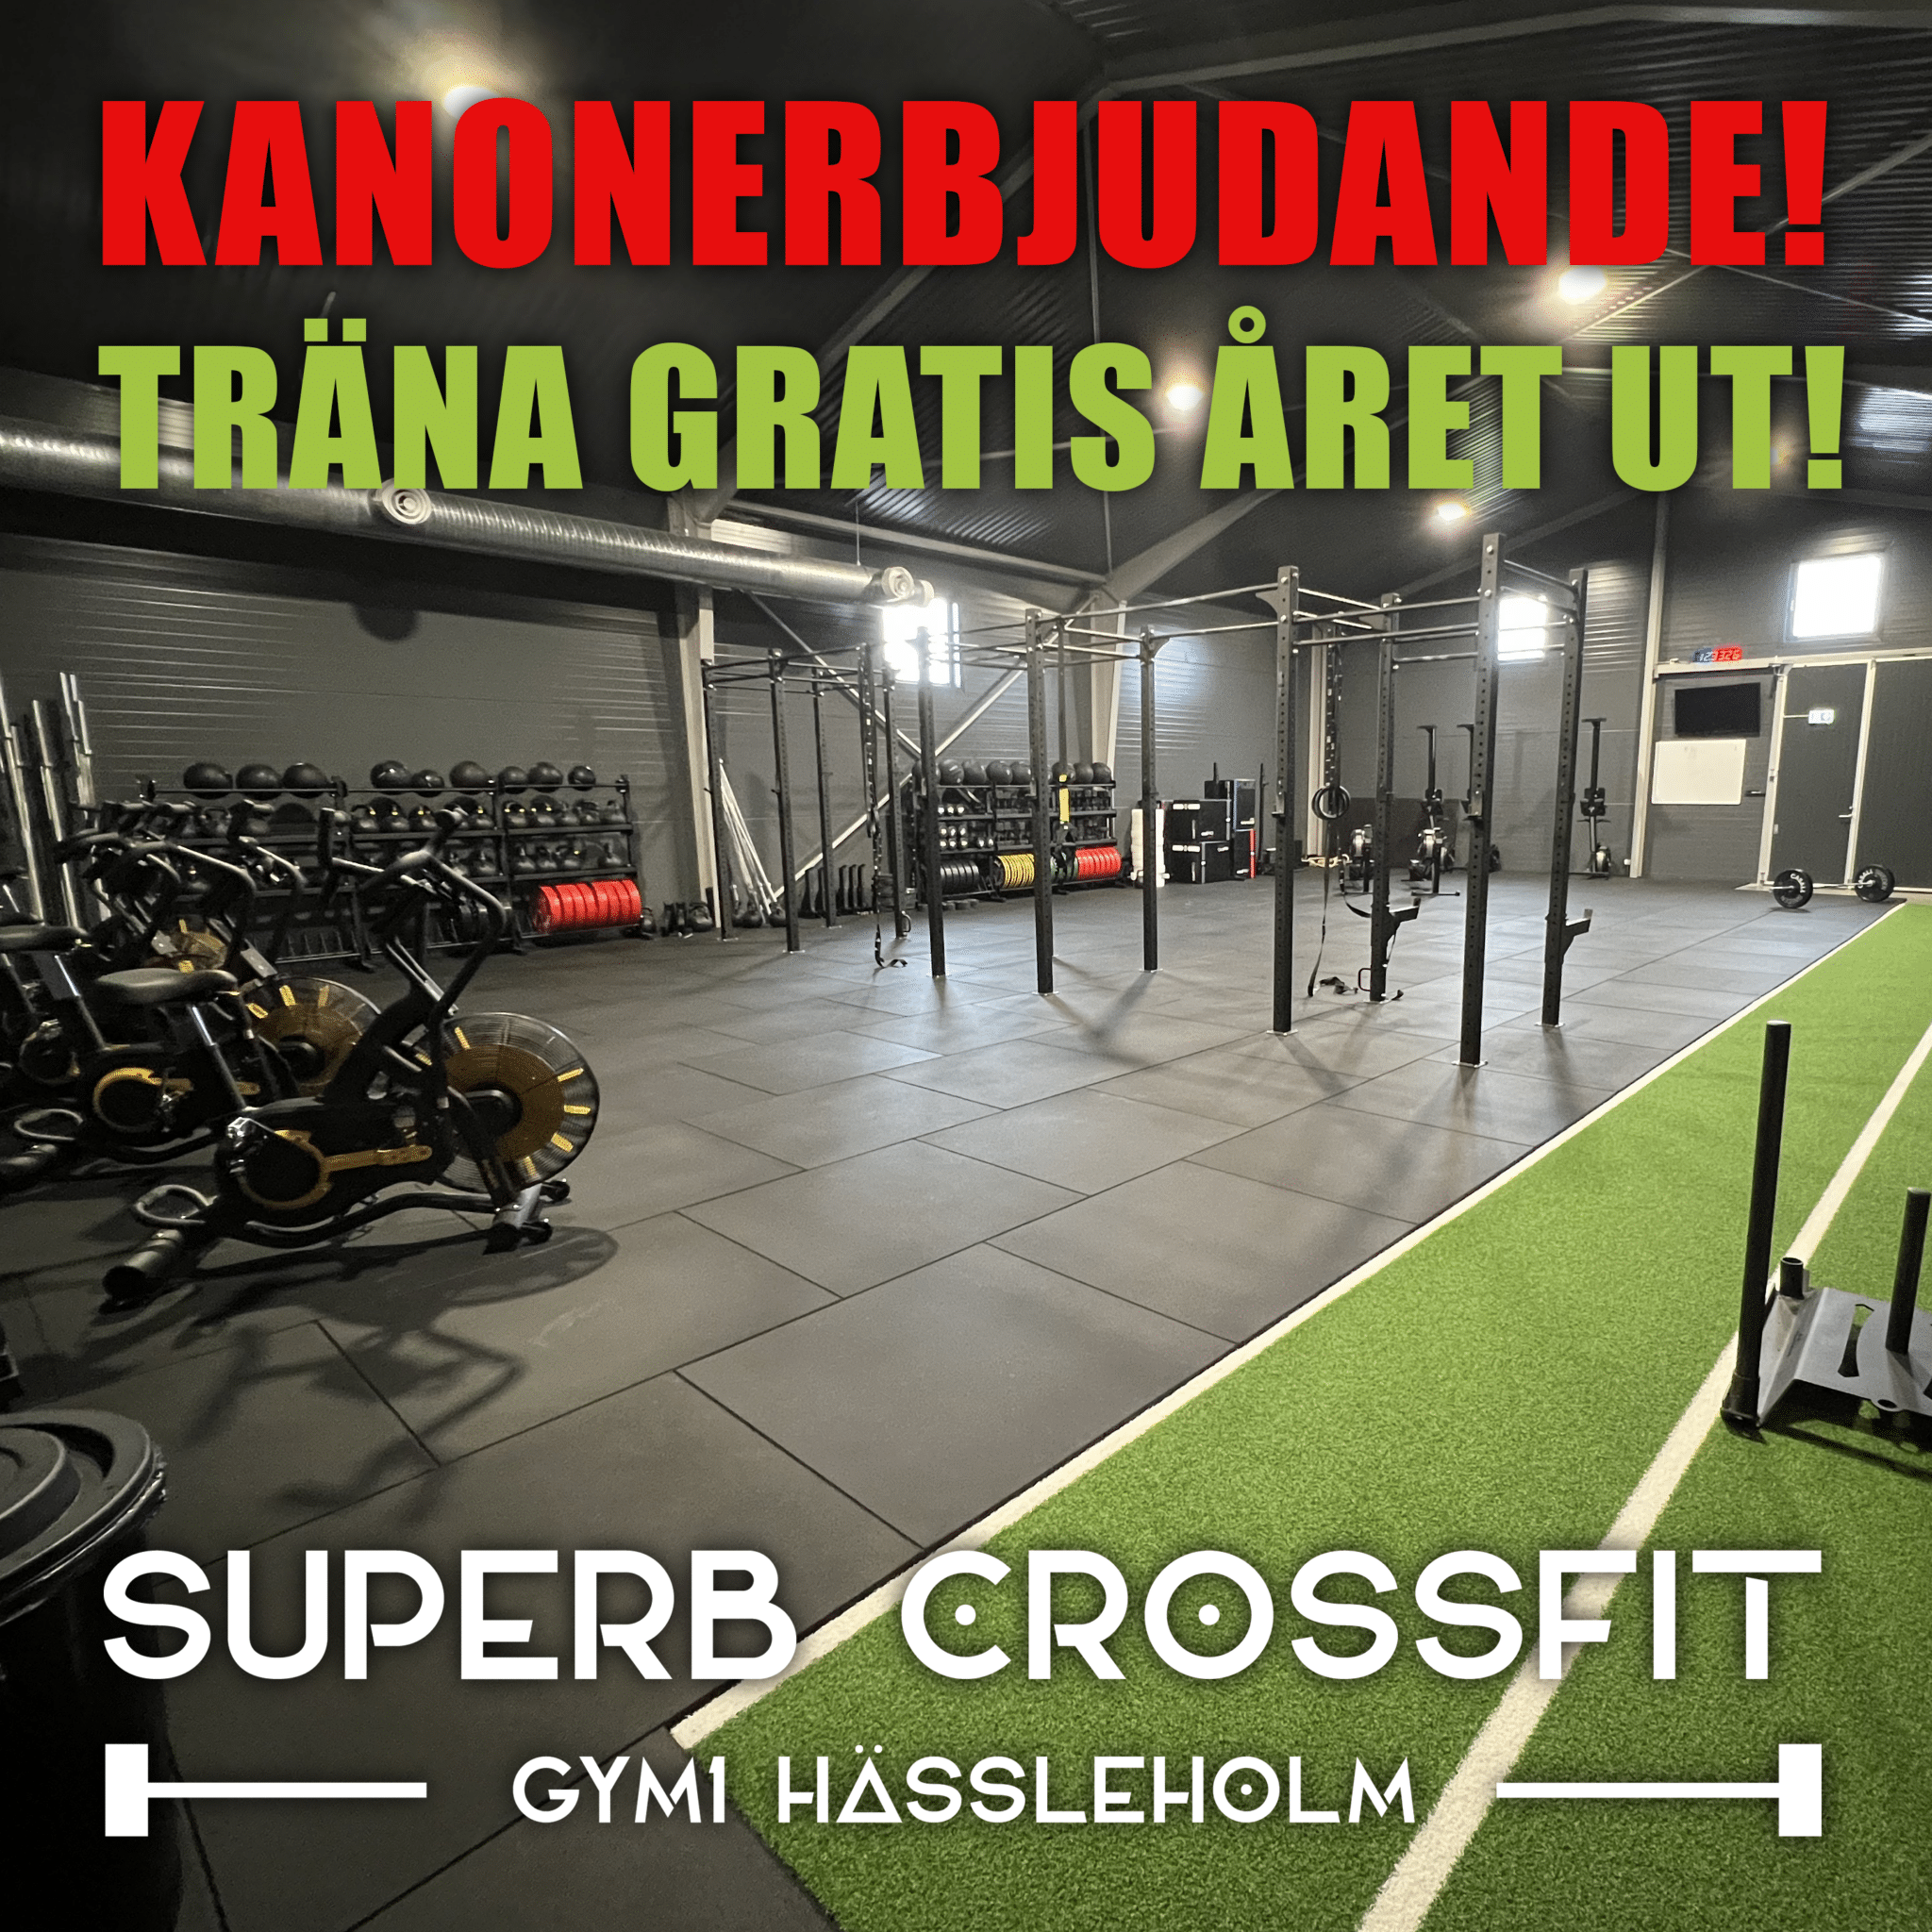 Gym1 Hässleholm Regemedia annons superb crossfit